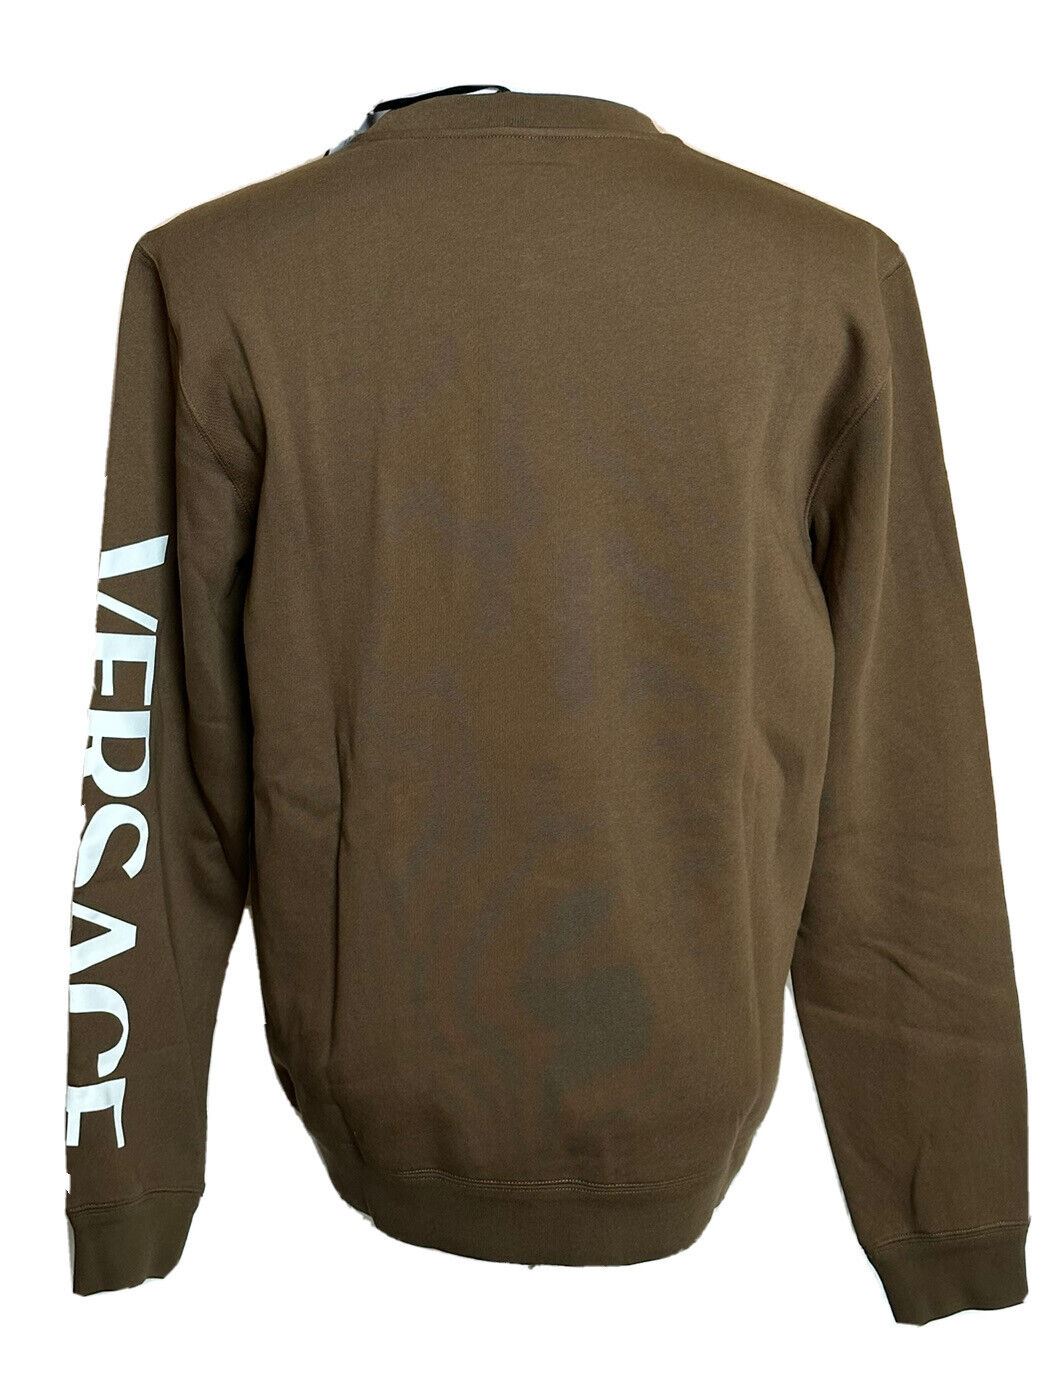 Neu mit Etikett: 850 $ Versace Medusa Renaissance Khaki Baumwoll-Sweatshirt 2XL 1008282 